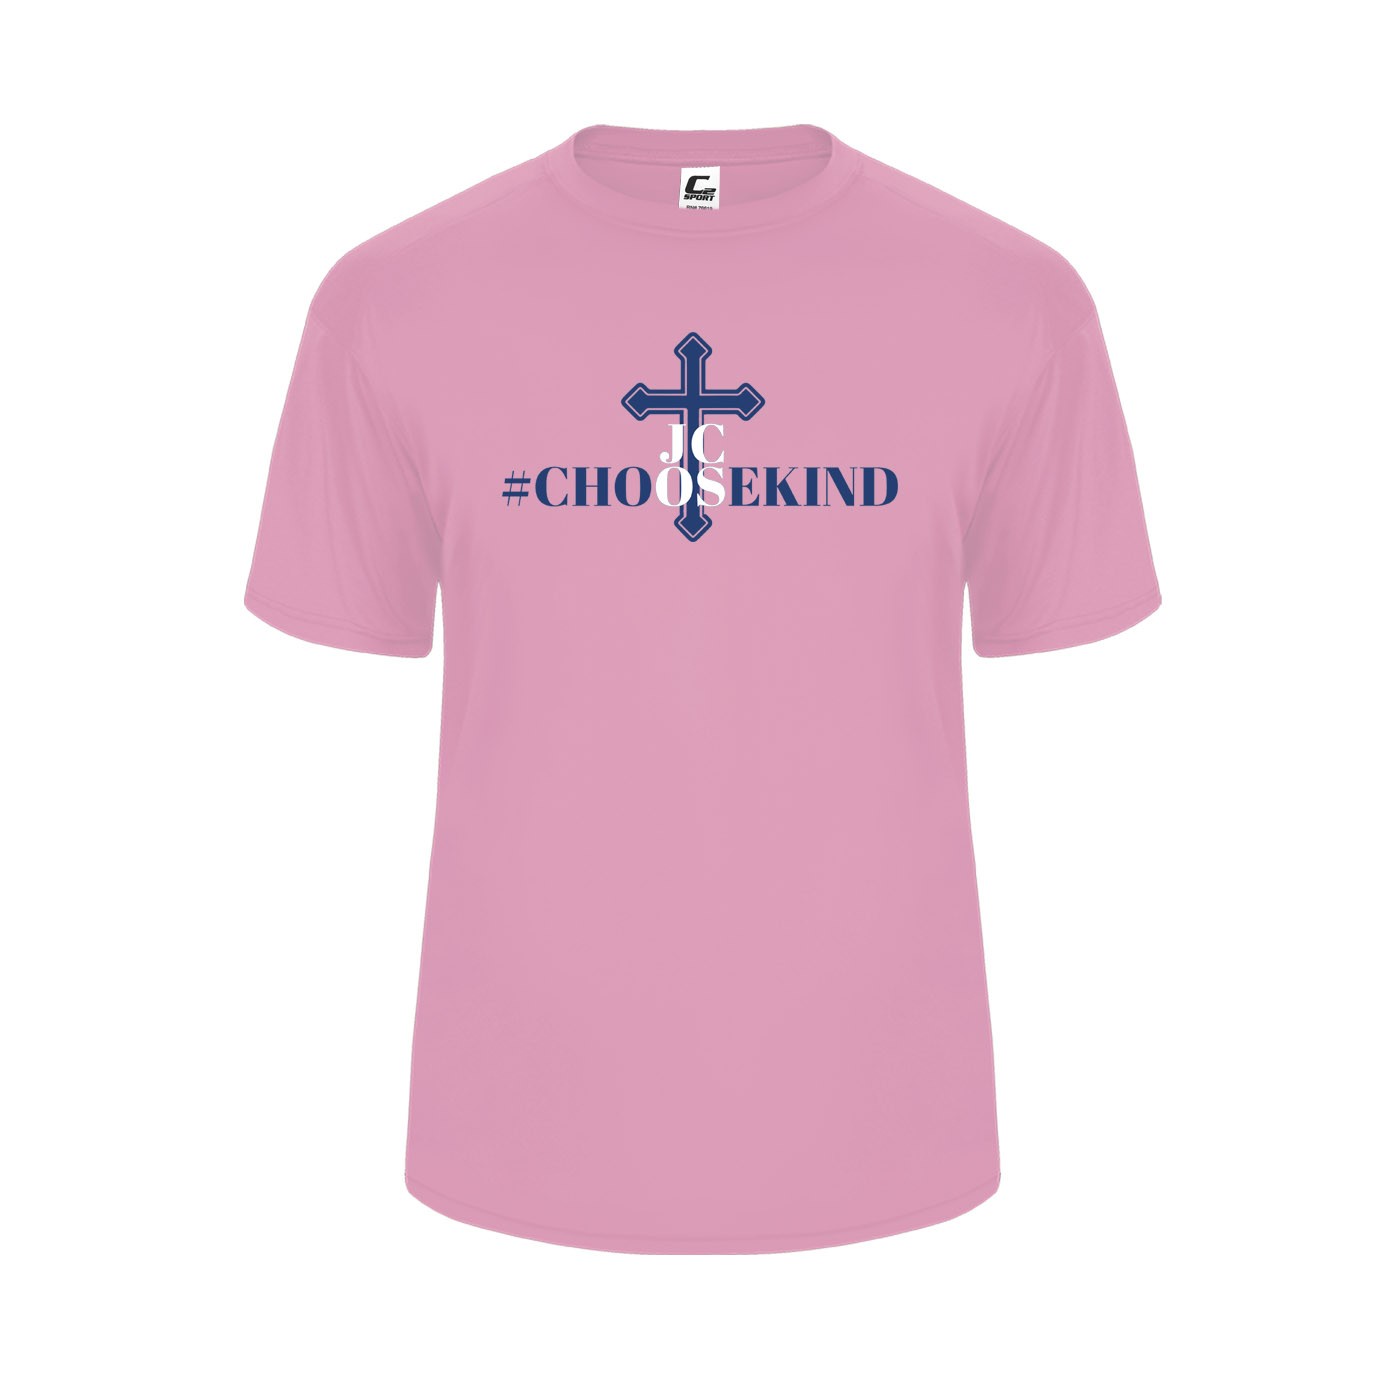 JCOS Spirit S/S Performance T-Shirt w/ Choose Kindness Logo #5-6 - Please Allow 3-4 Weeks for Fulfillment